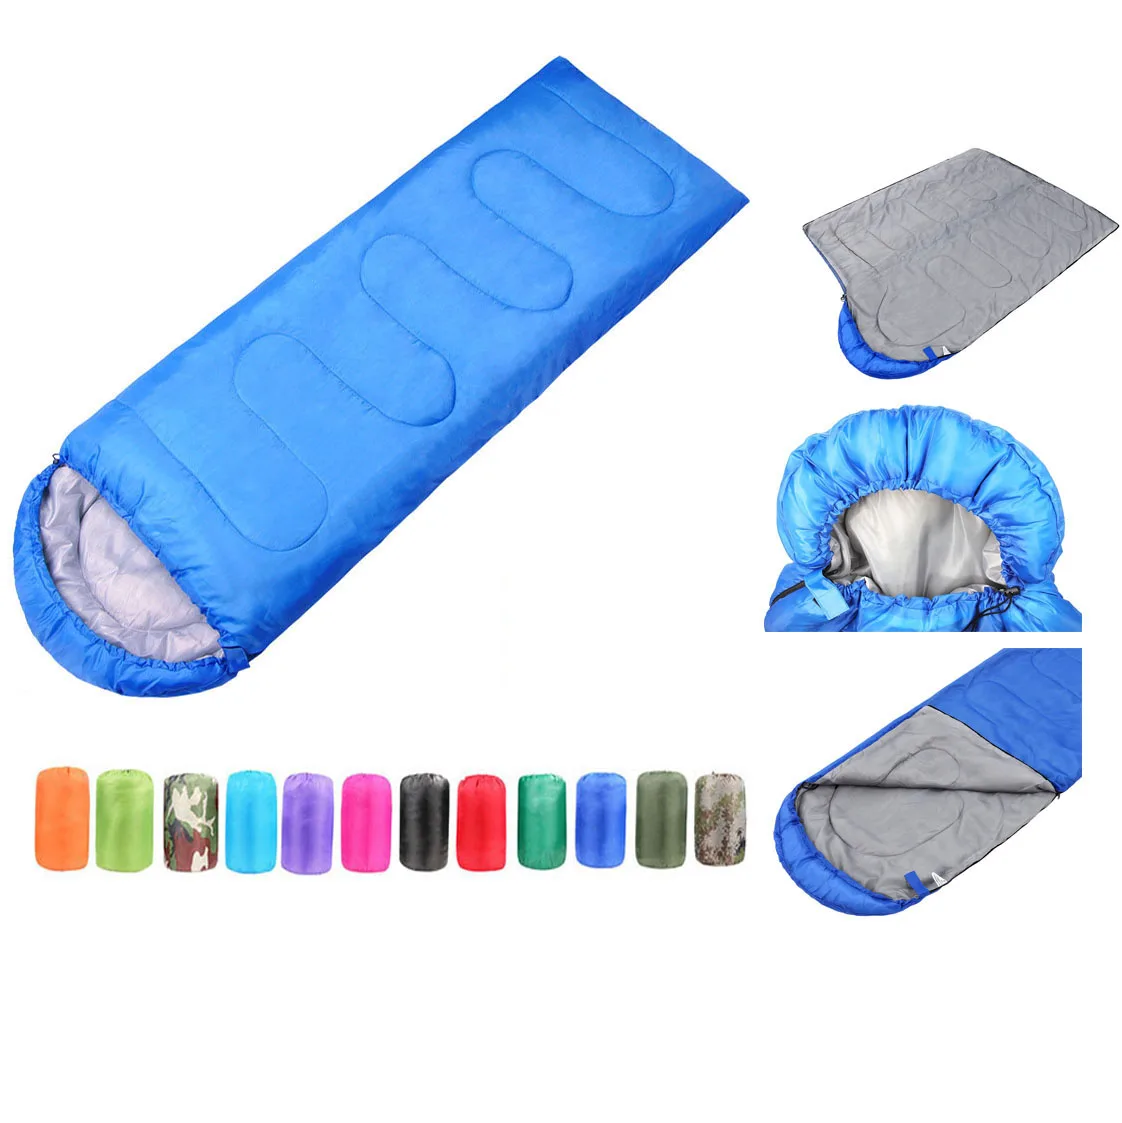 
Wholesale folding ultralight custom logo sleeping bag with compacted pouch camping sleeping pod sleeping bag for 3 seasons  (60697854634)